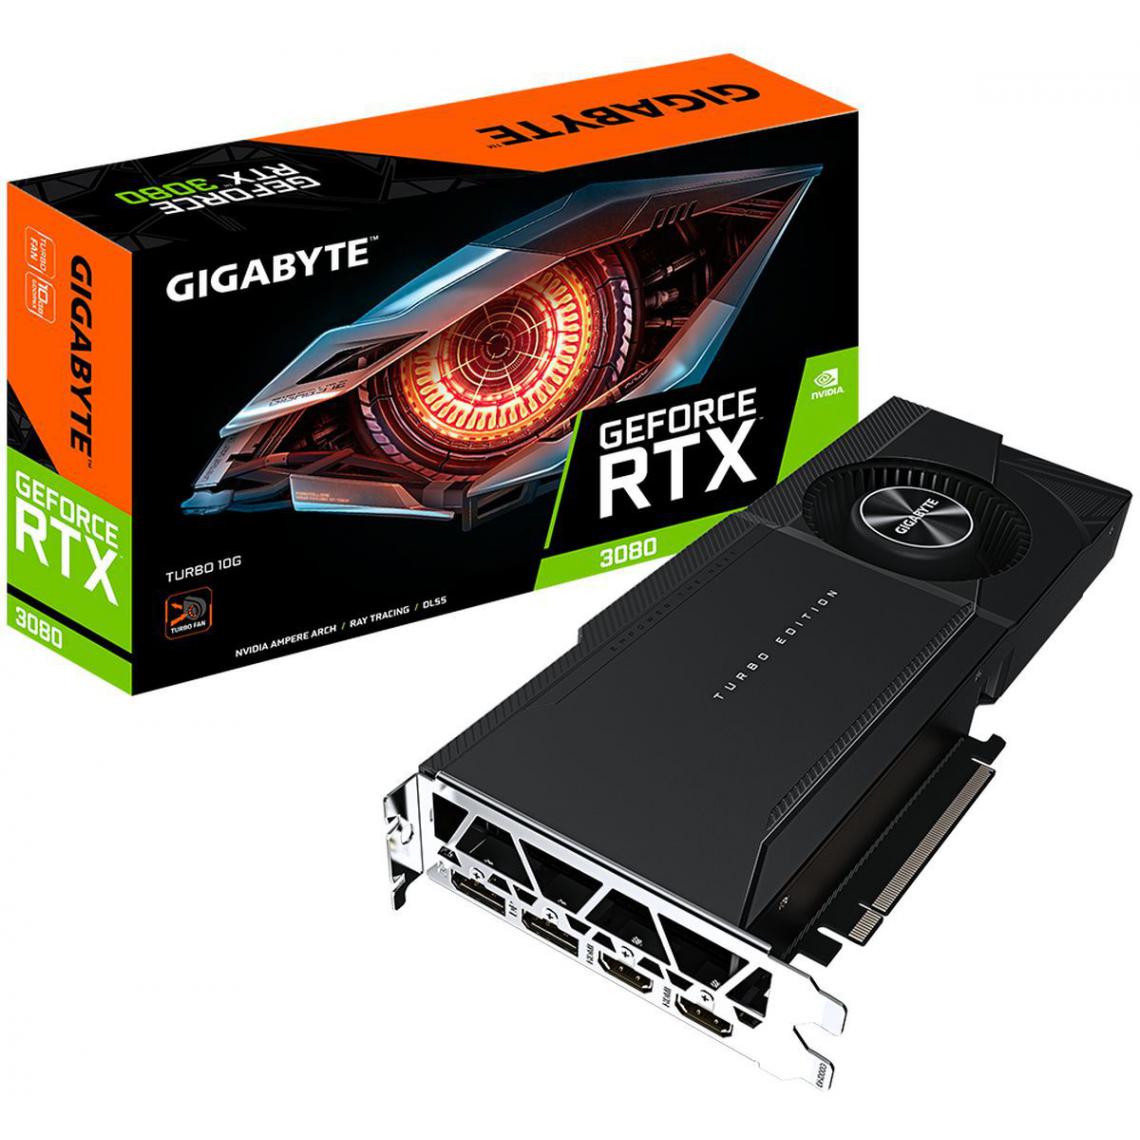 Gigabyte - GeForce RTX 3080 TURBO 10G  - Carte Graphique NVIDIA